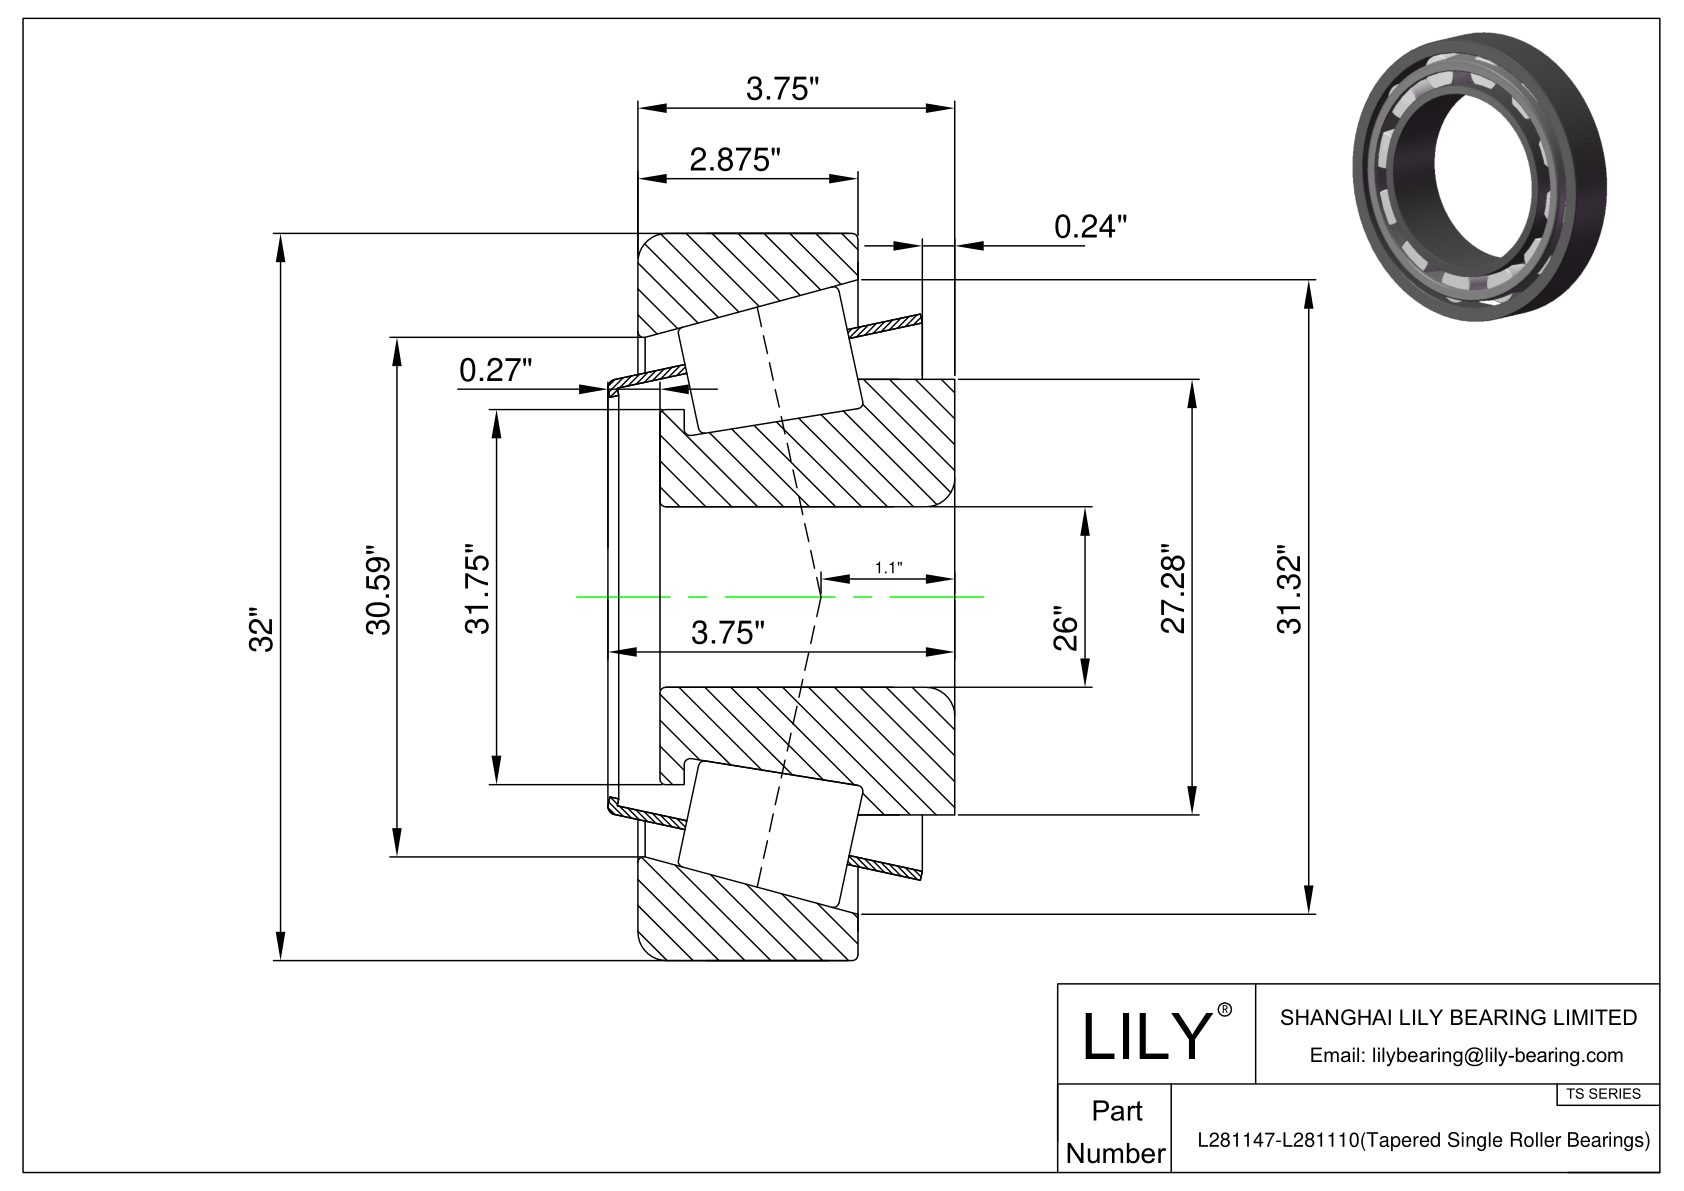 L281147-L281110 TS系列(圆锥单滚子轴承)(英制) CAD图形